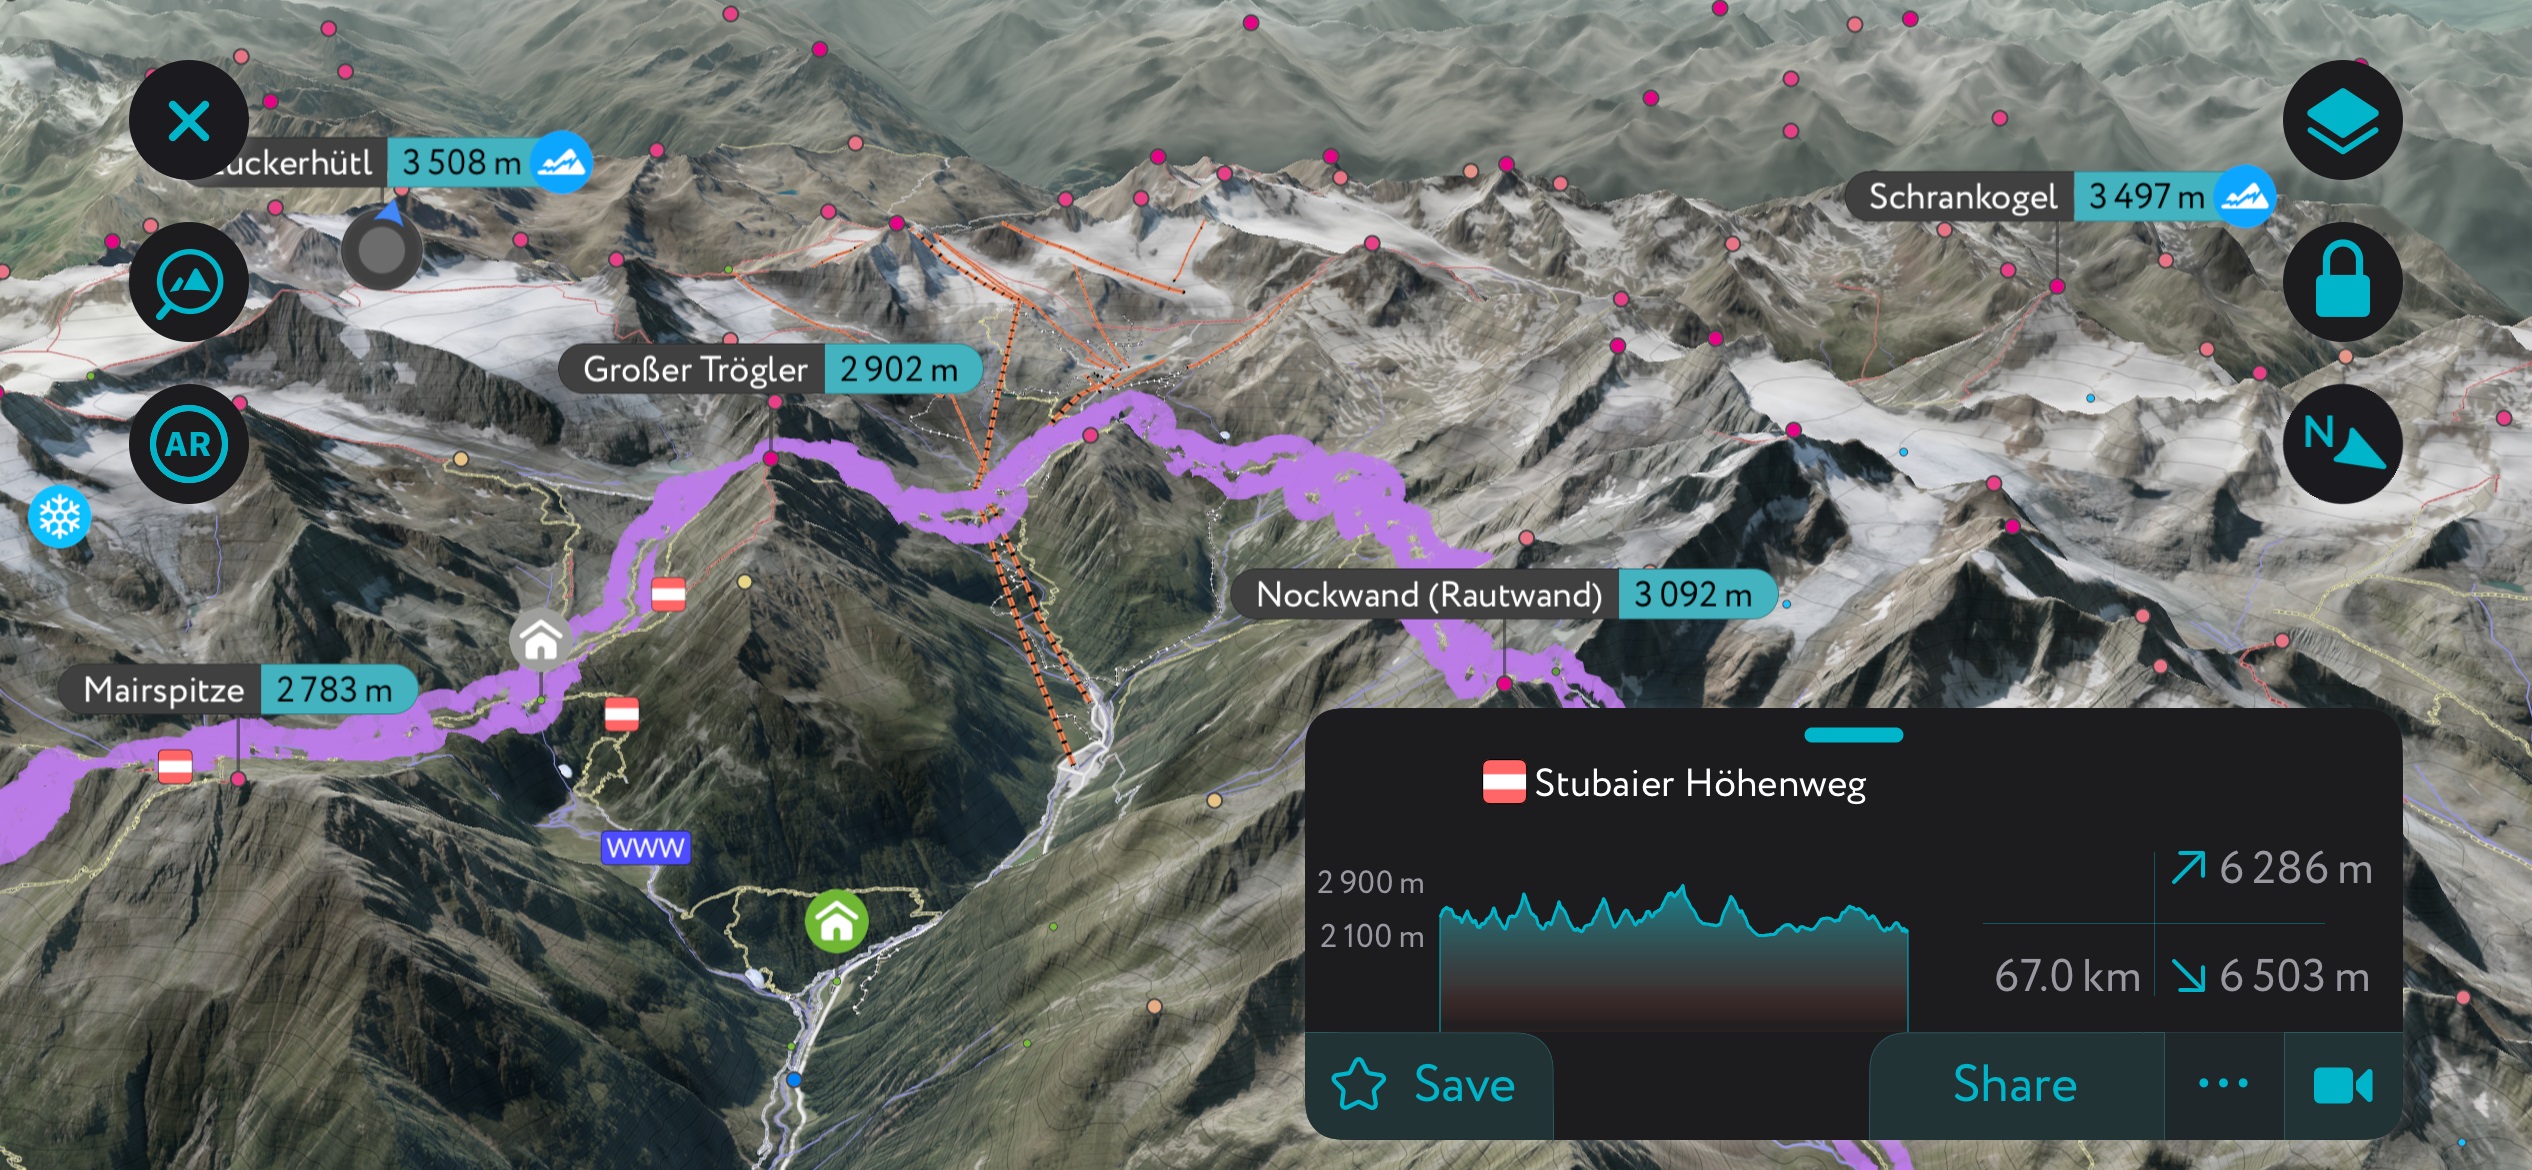 A generation of the Stubai High Trail using PeakVisor’s mobile app. Stubai Alps